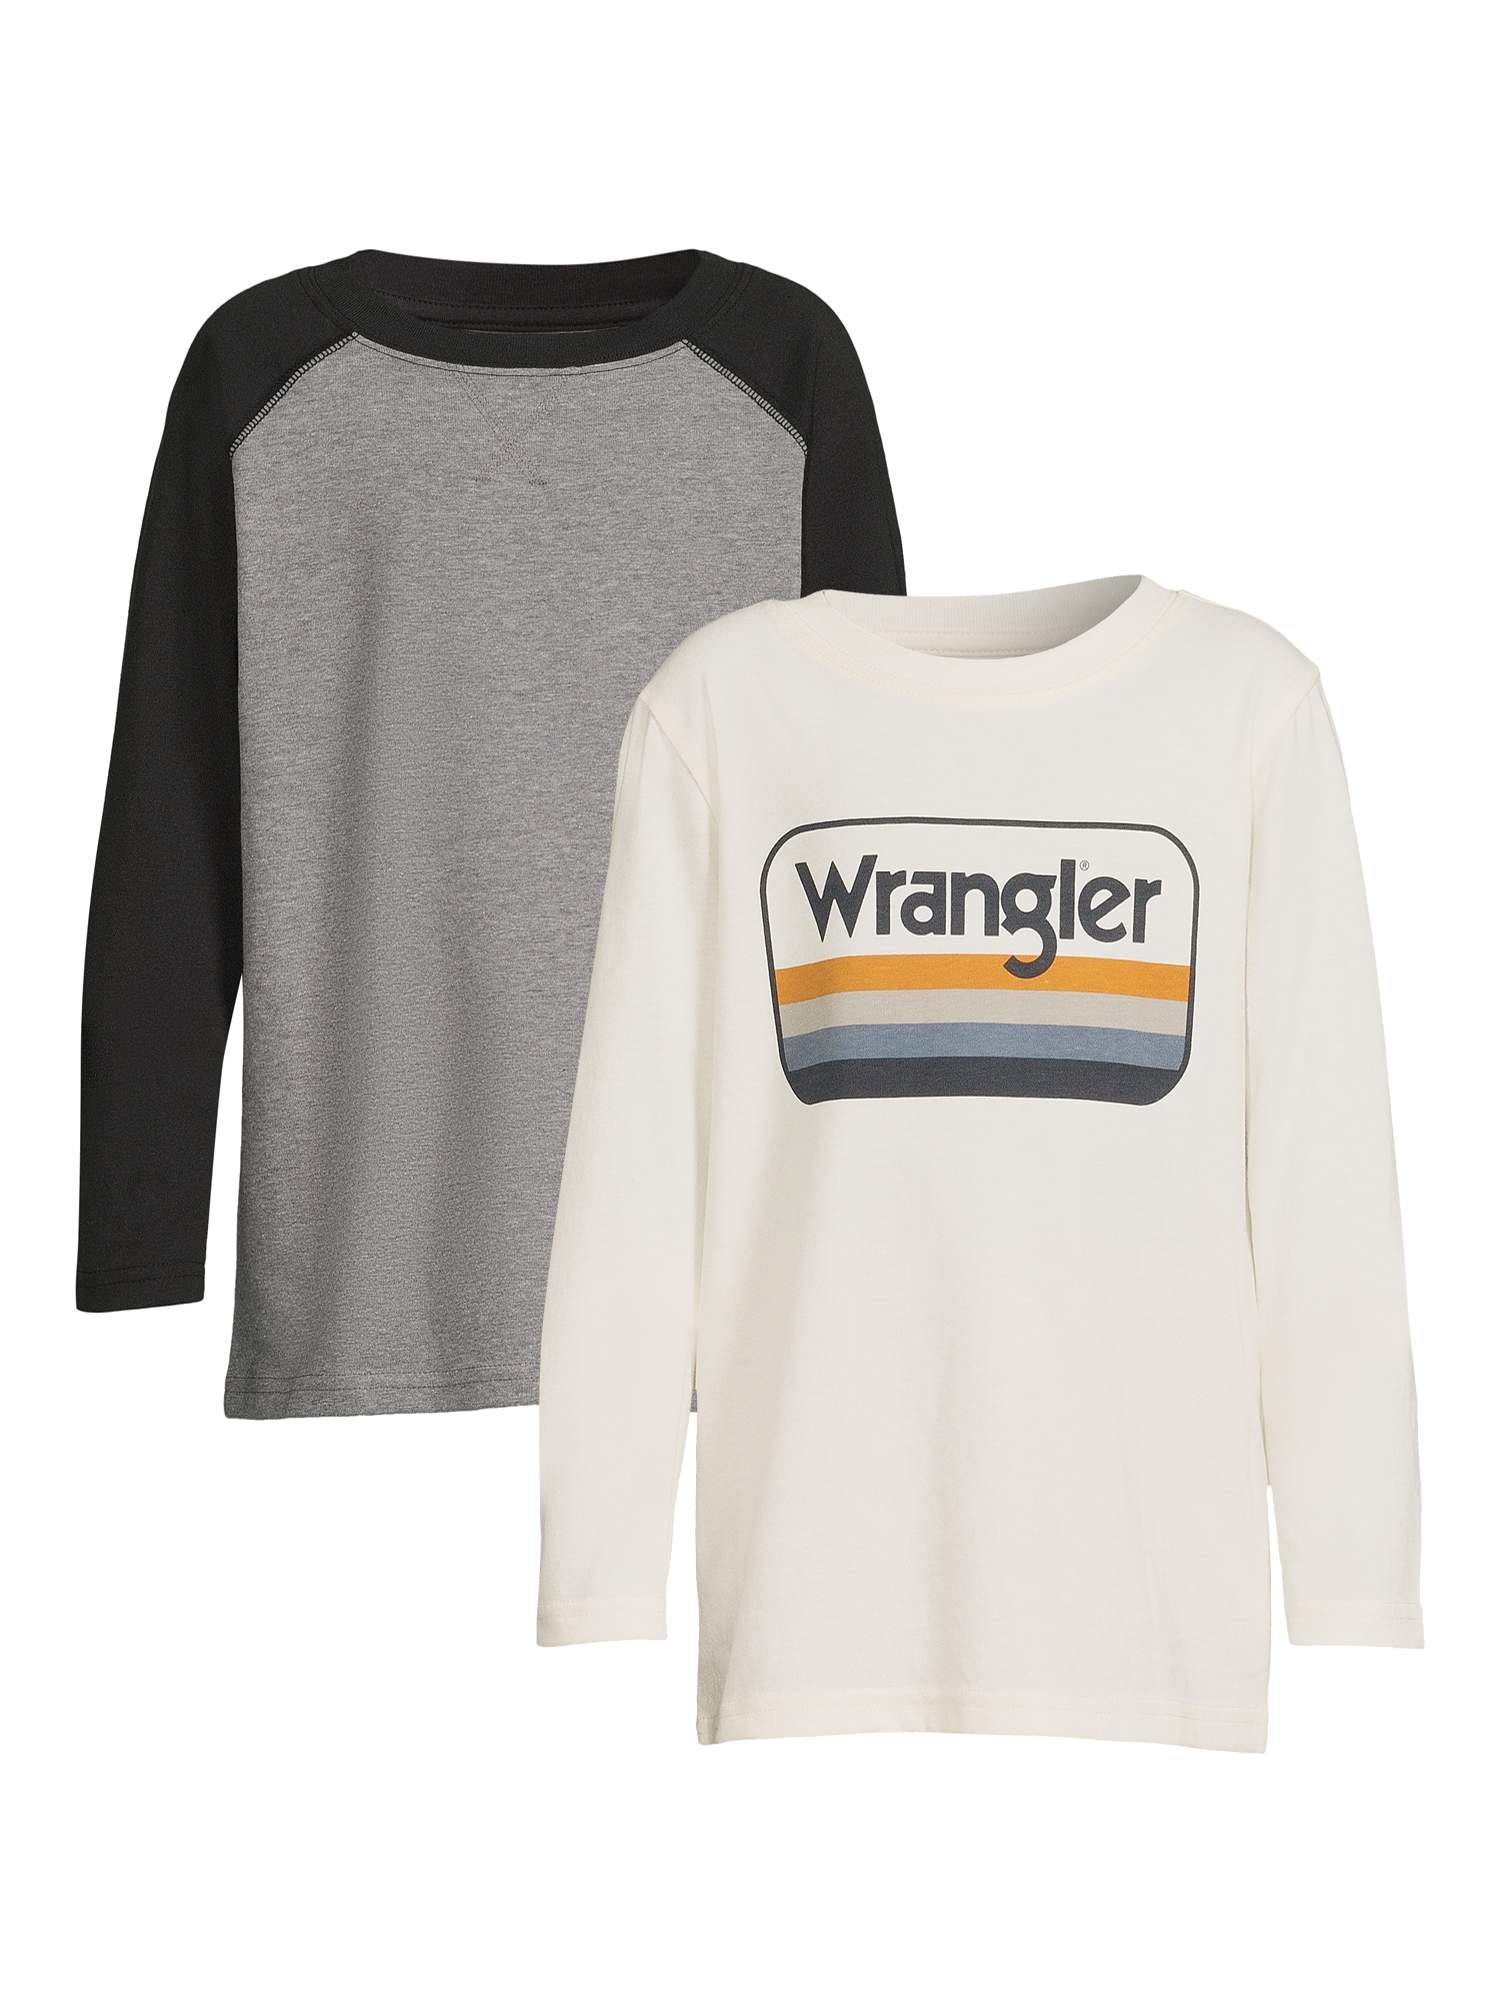 Wrangler Boys Long Sleeve Raglan and Graphic Tee, 2-Pack, Sizes 4-18 & Husky - image 1 of 5